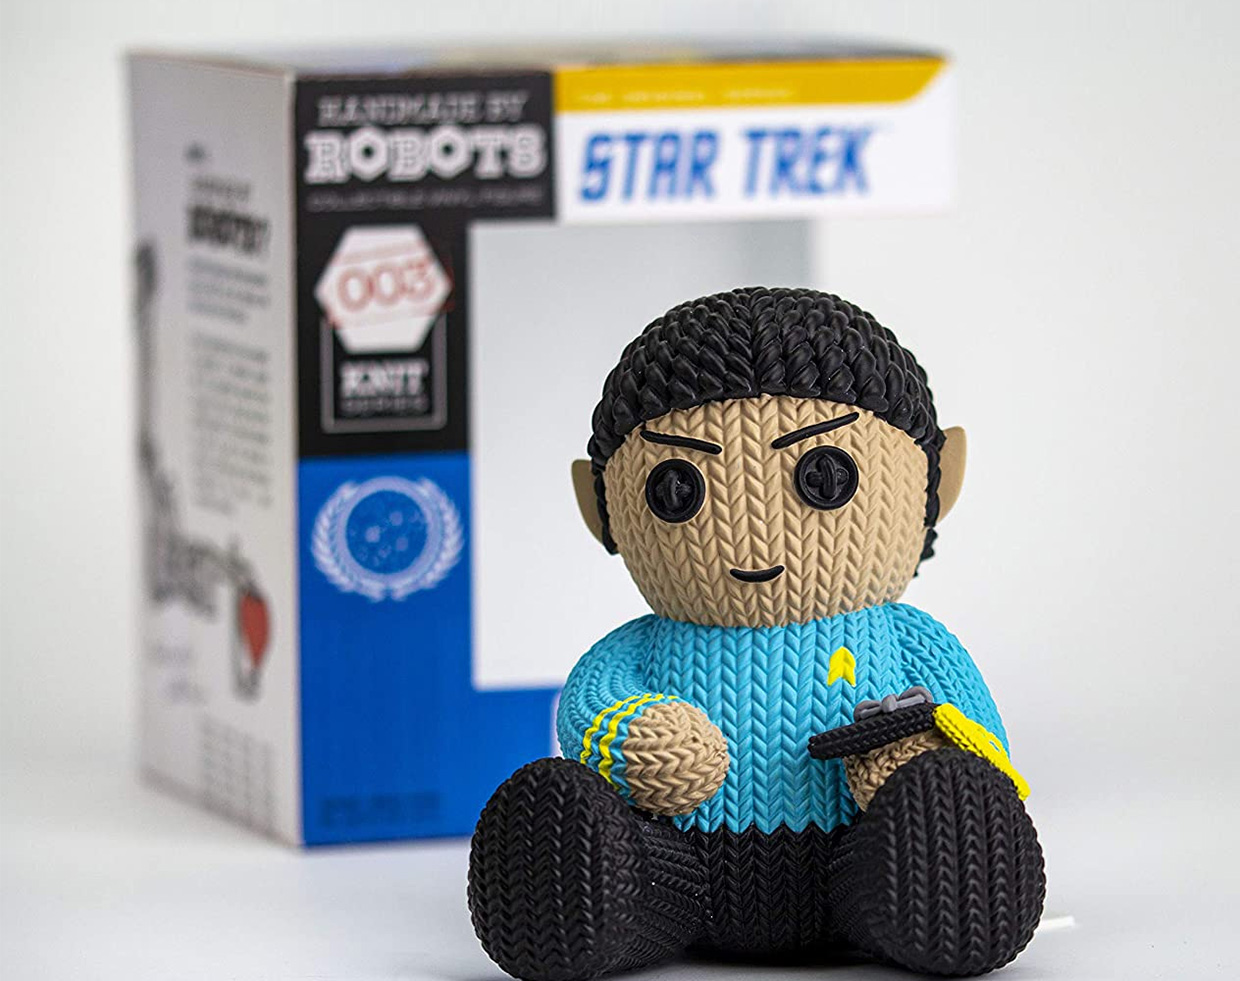 Star Trek Handmade by Robots Toys